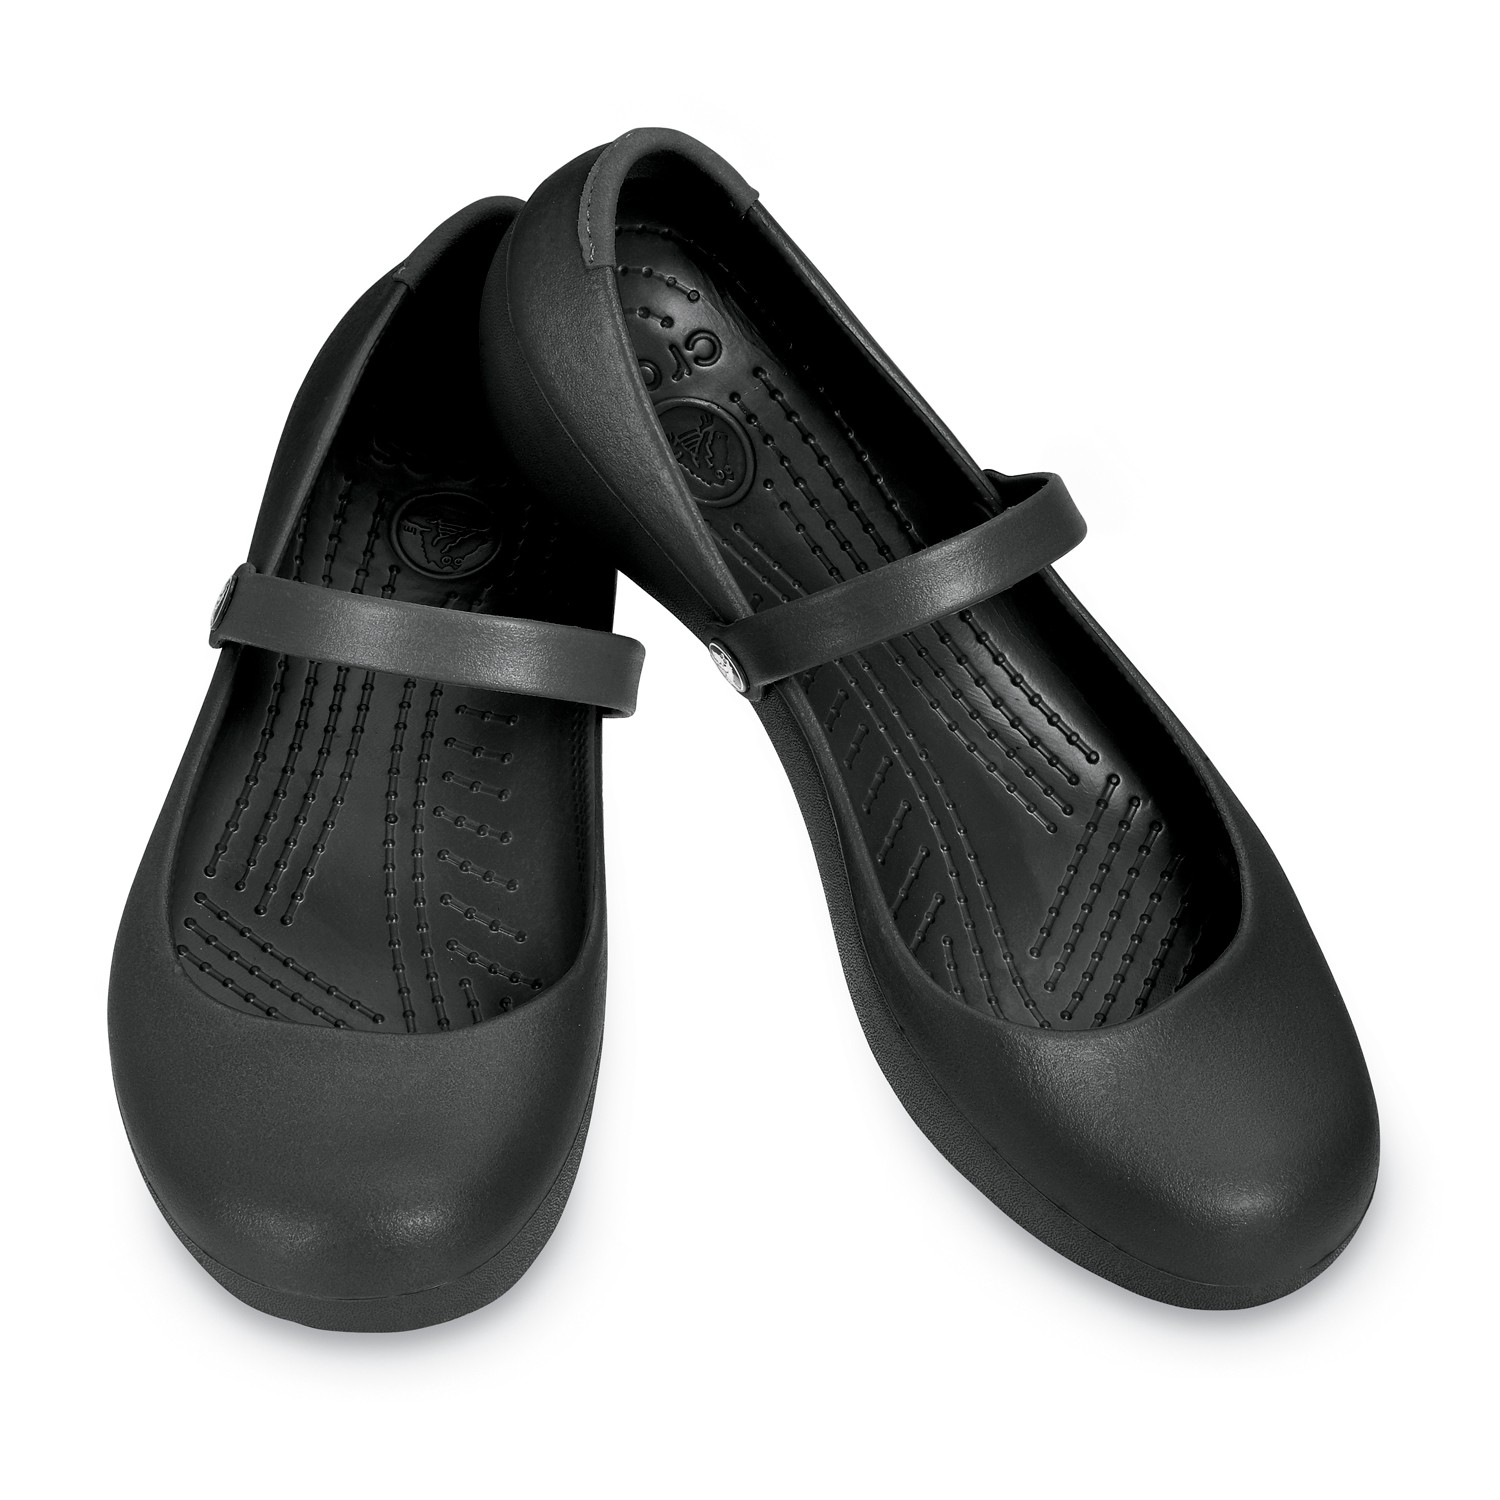 comfy black work shoes